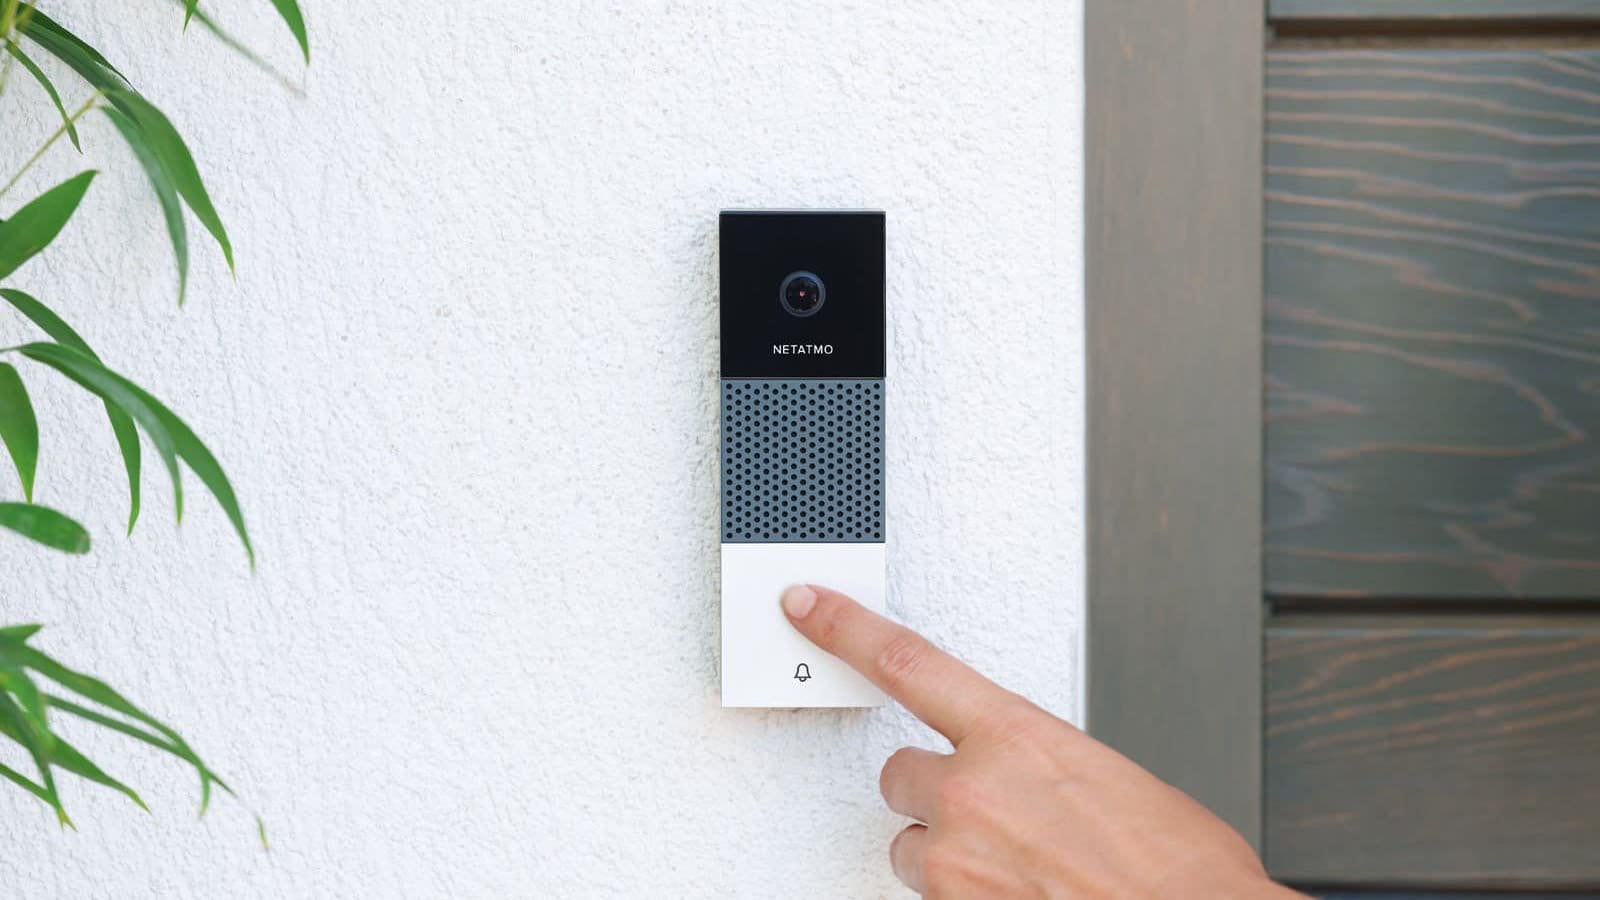 Netatmo Smart Video Doorbell available from September 28 2020